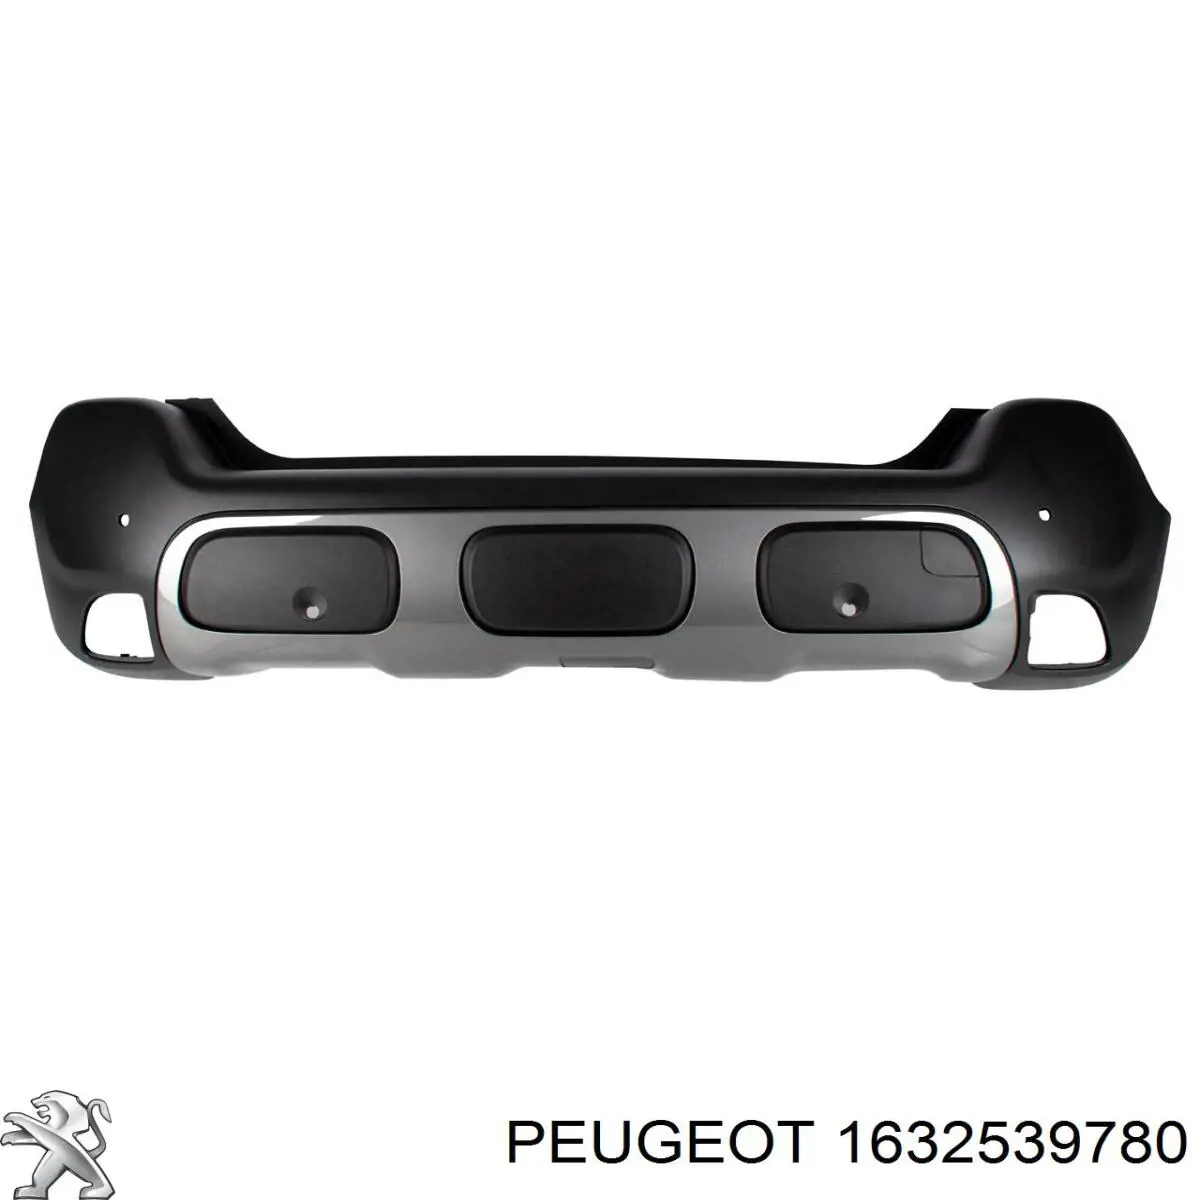 1632539780 Peugeot/Citroen parachoques trasero